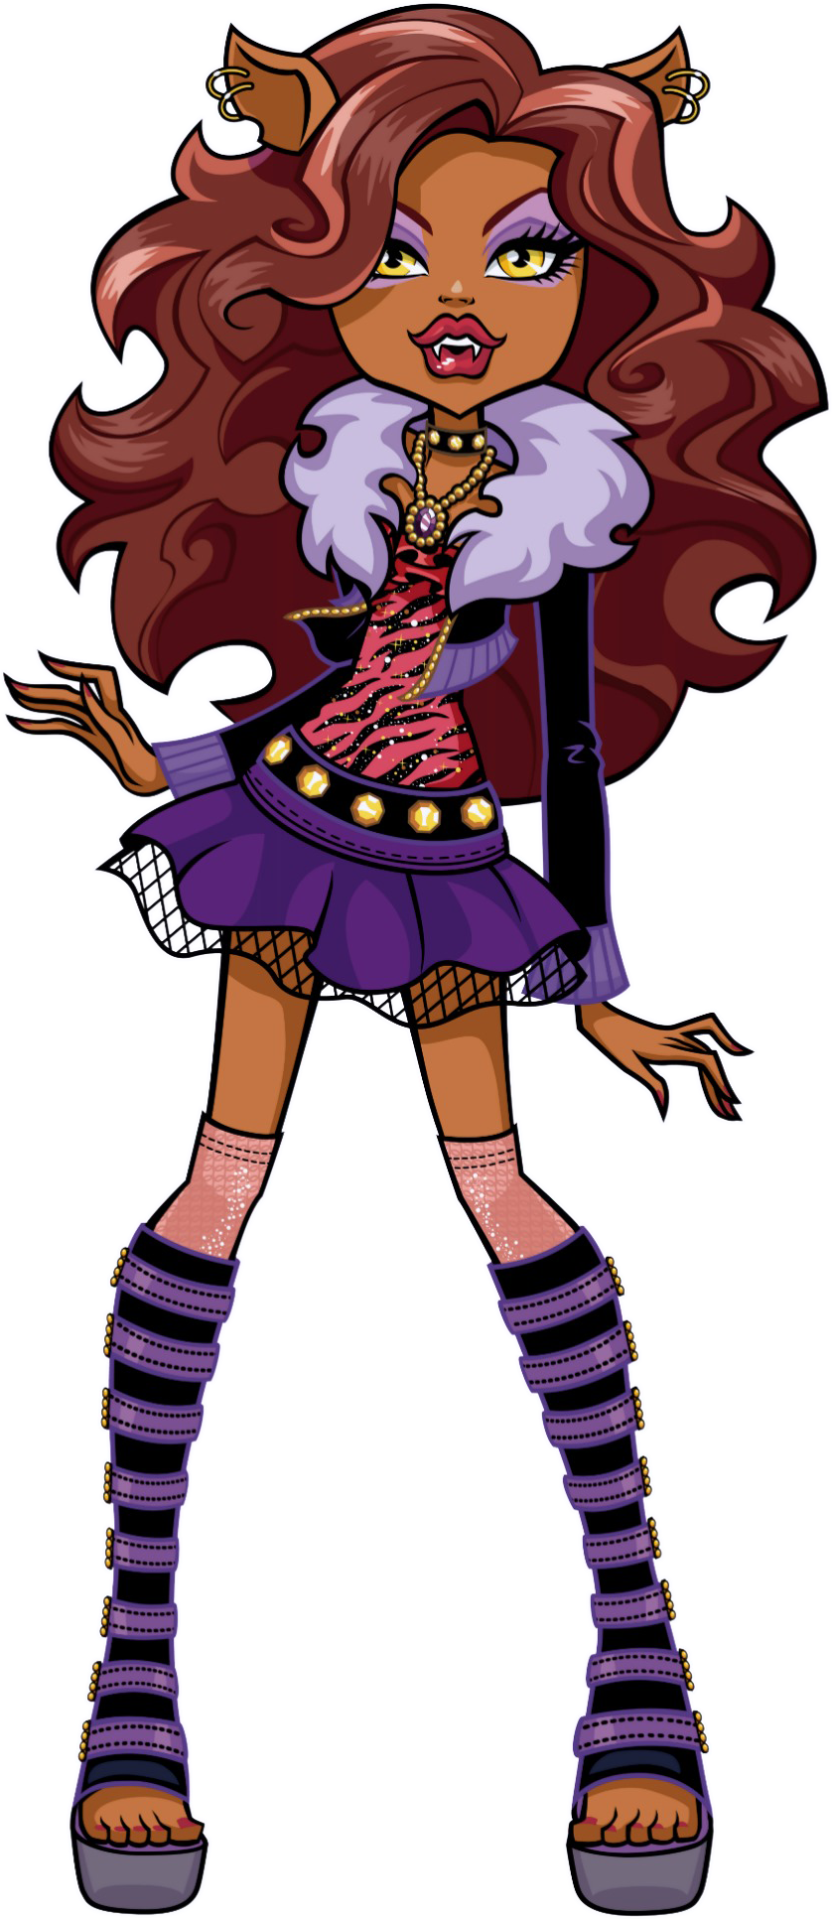 Monster High: Clawdeen Wolf! Clawdeen Wolf is the daughter of a Werewolf. Confident and fierce, she. Monster high characters, Monster high art, Monster high dolls